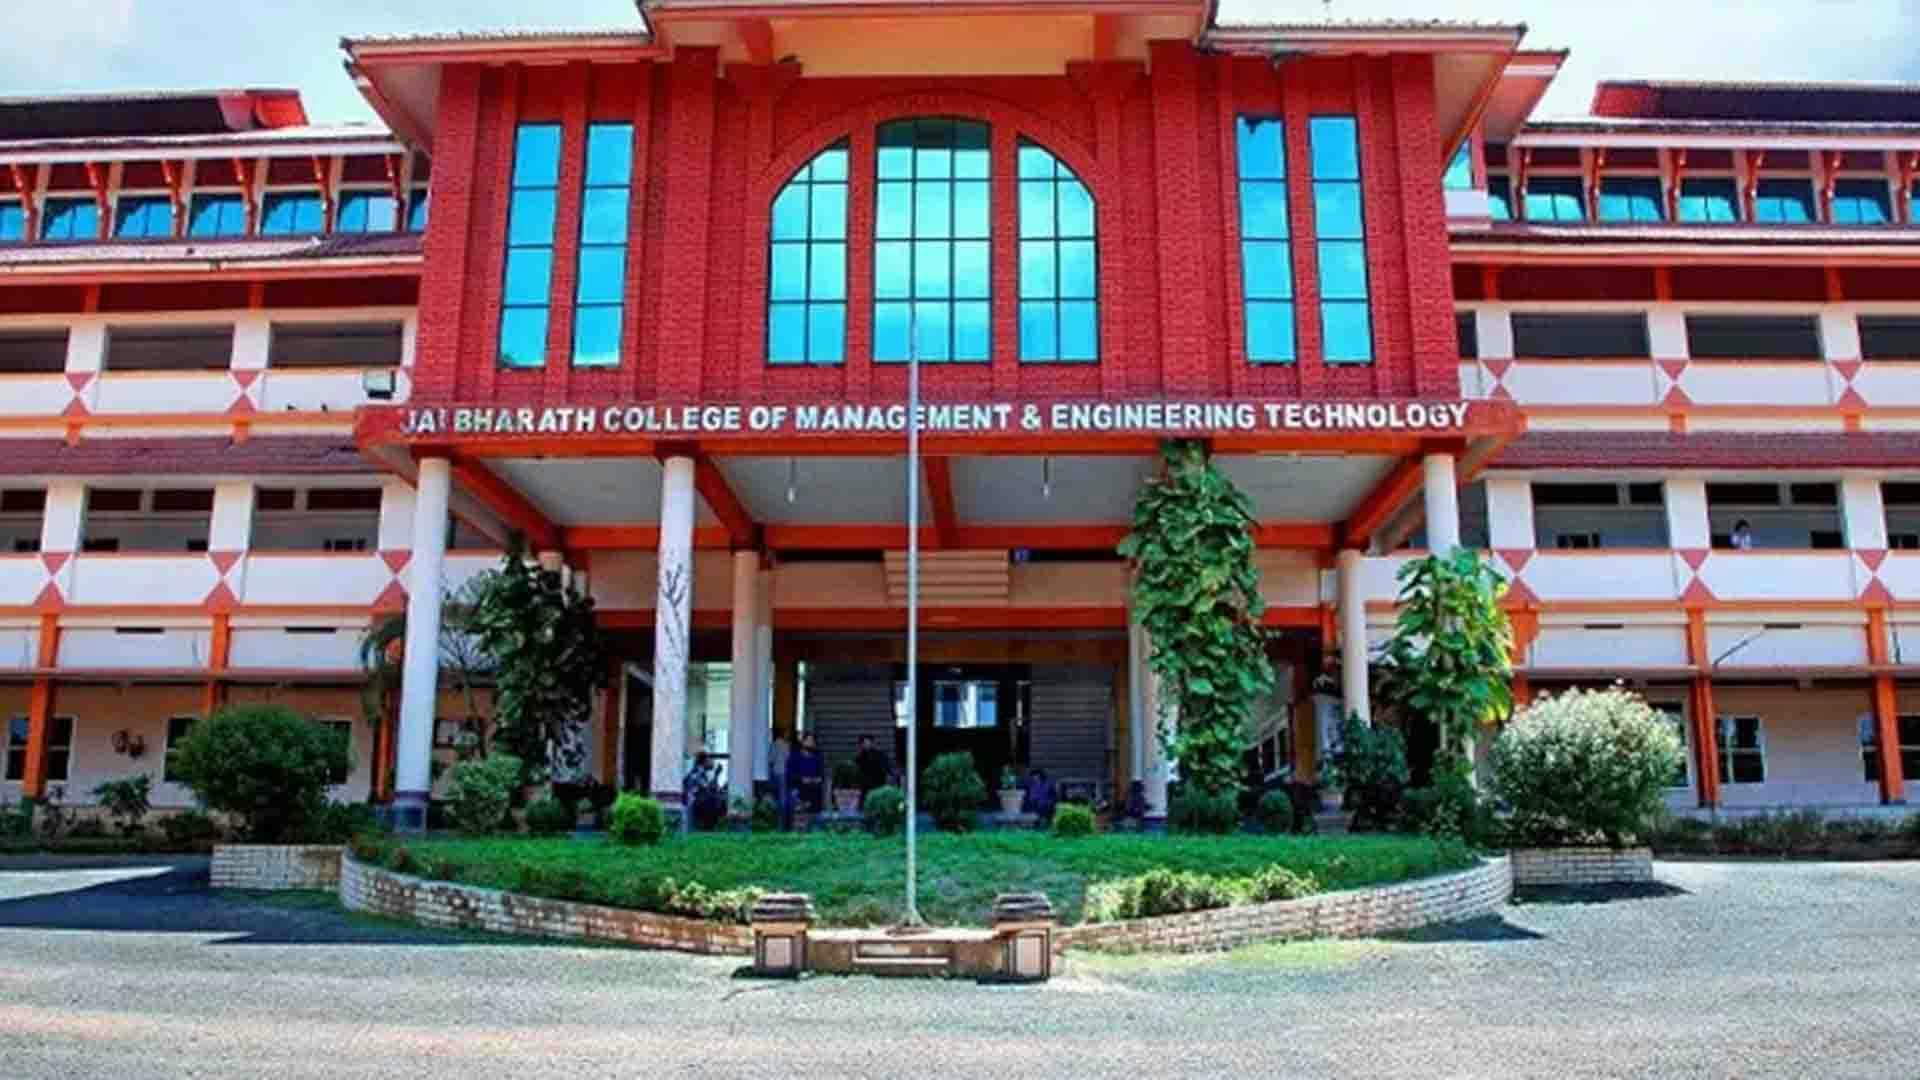 Jai Bharath School of Management Studies, Kochi